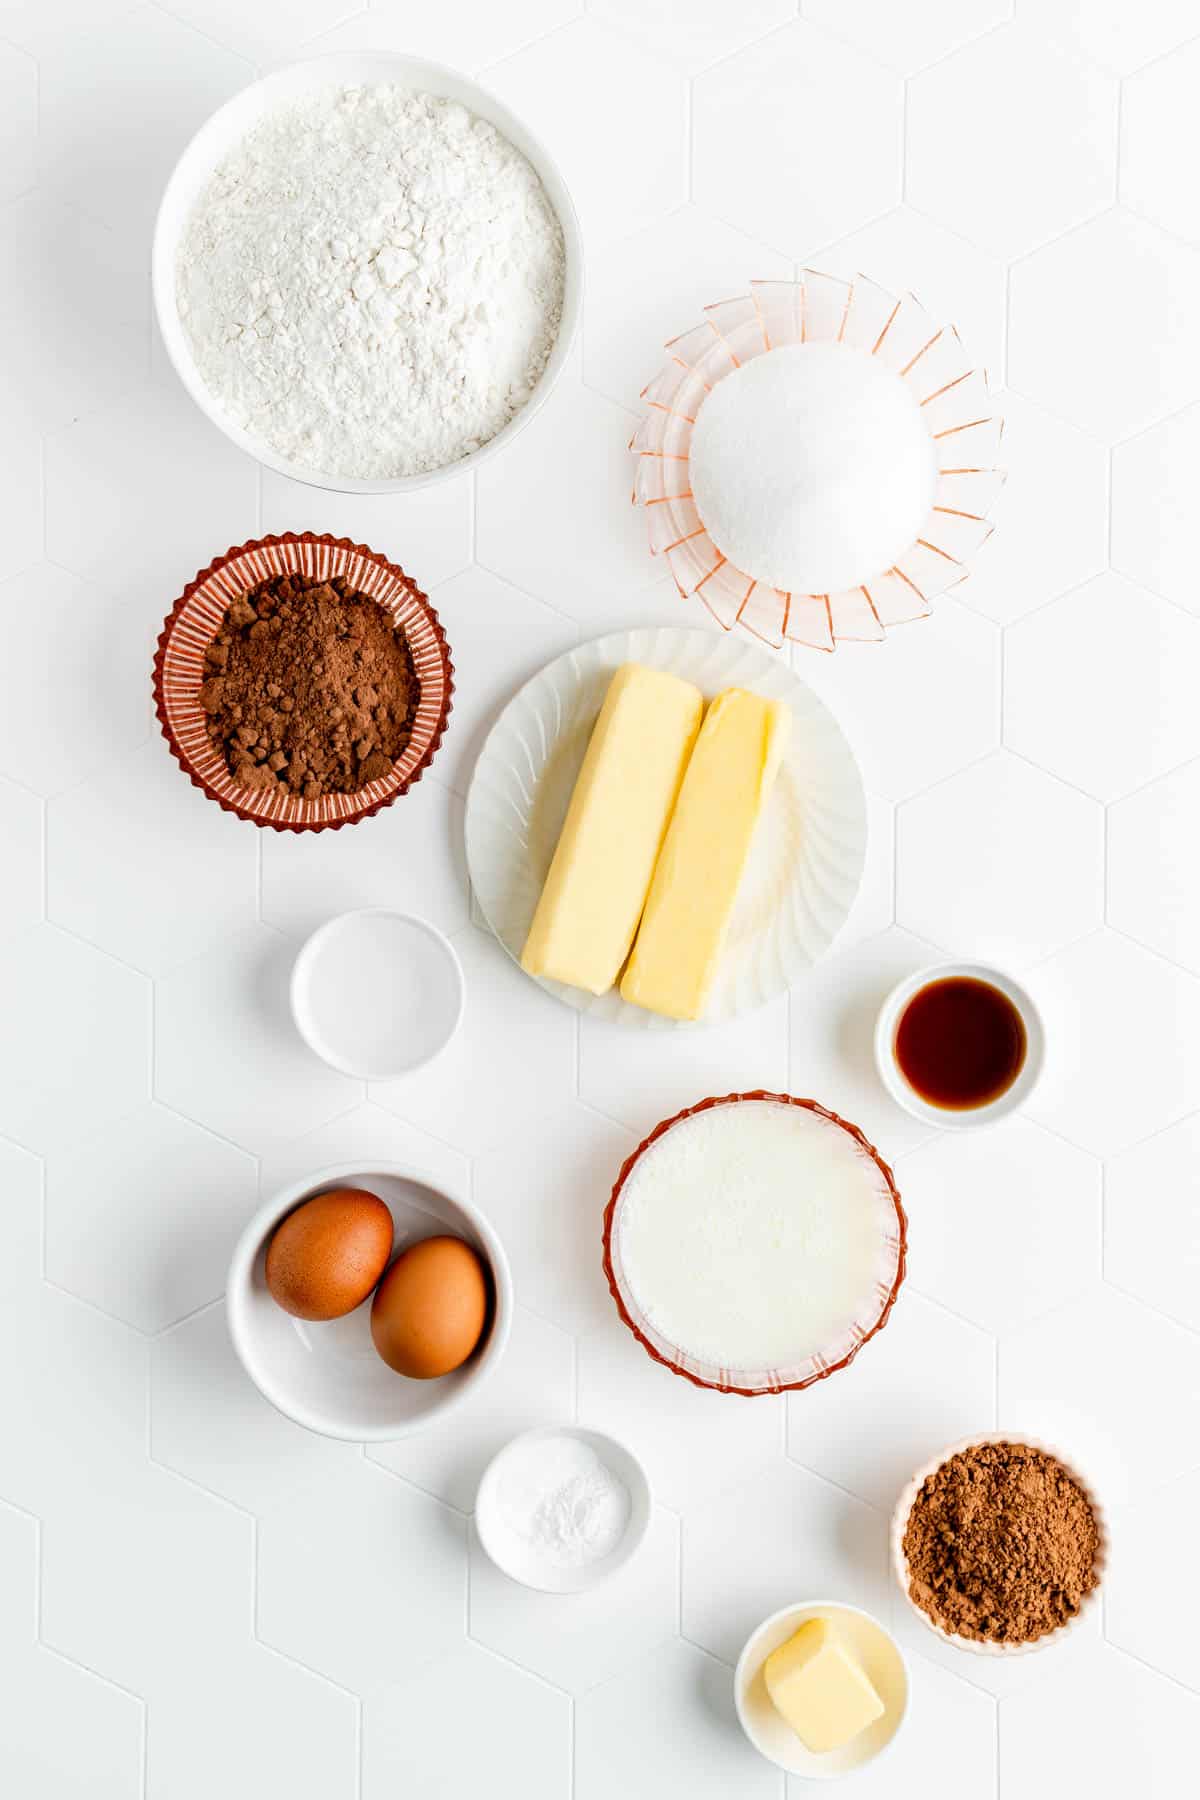 Ingredients for red velvet Bundt cake in individual bowls on white background.